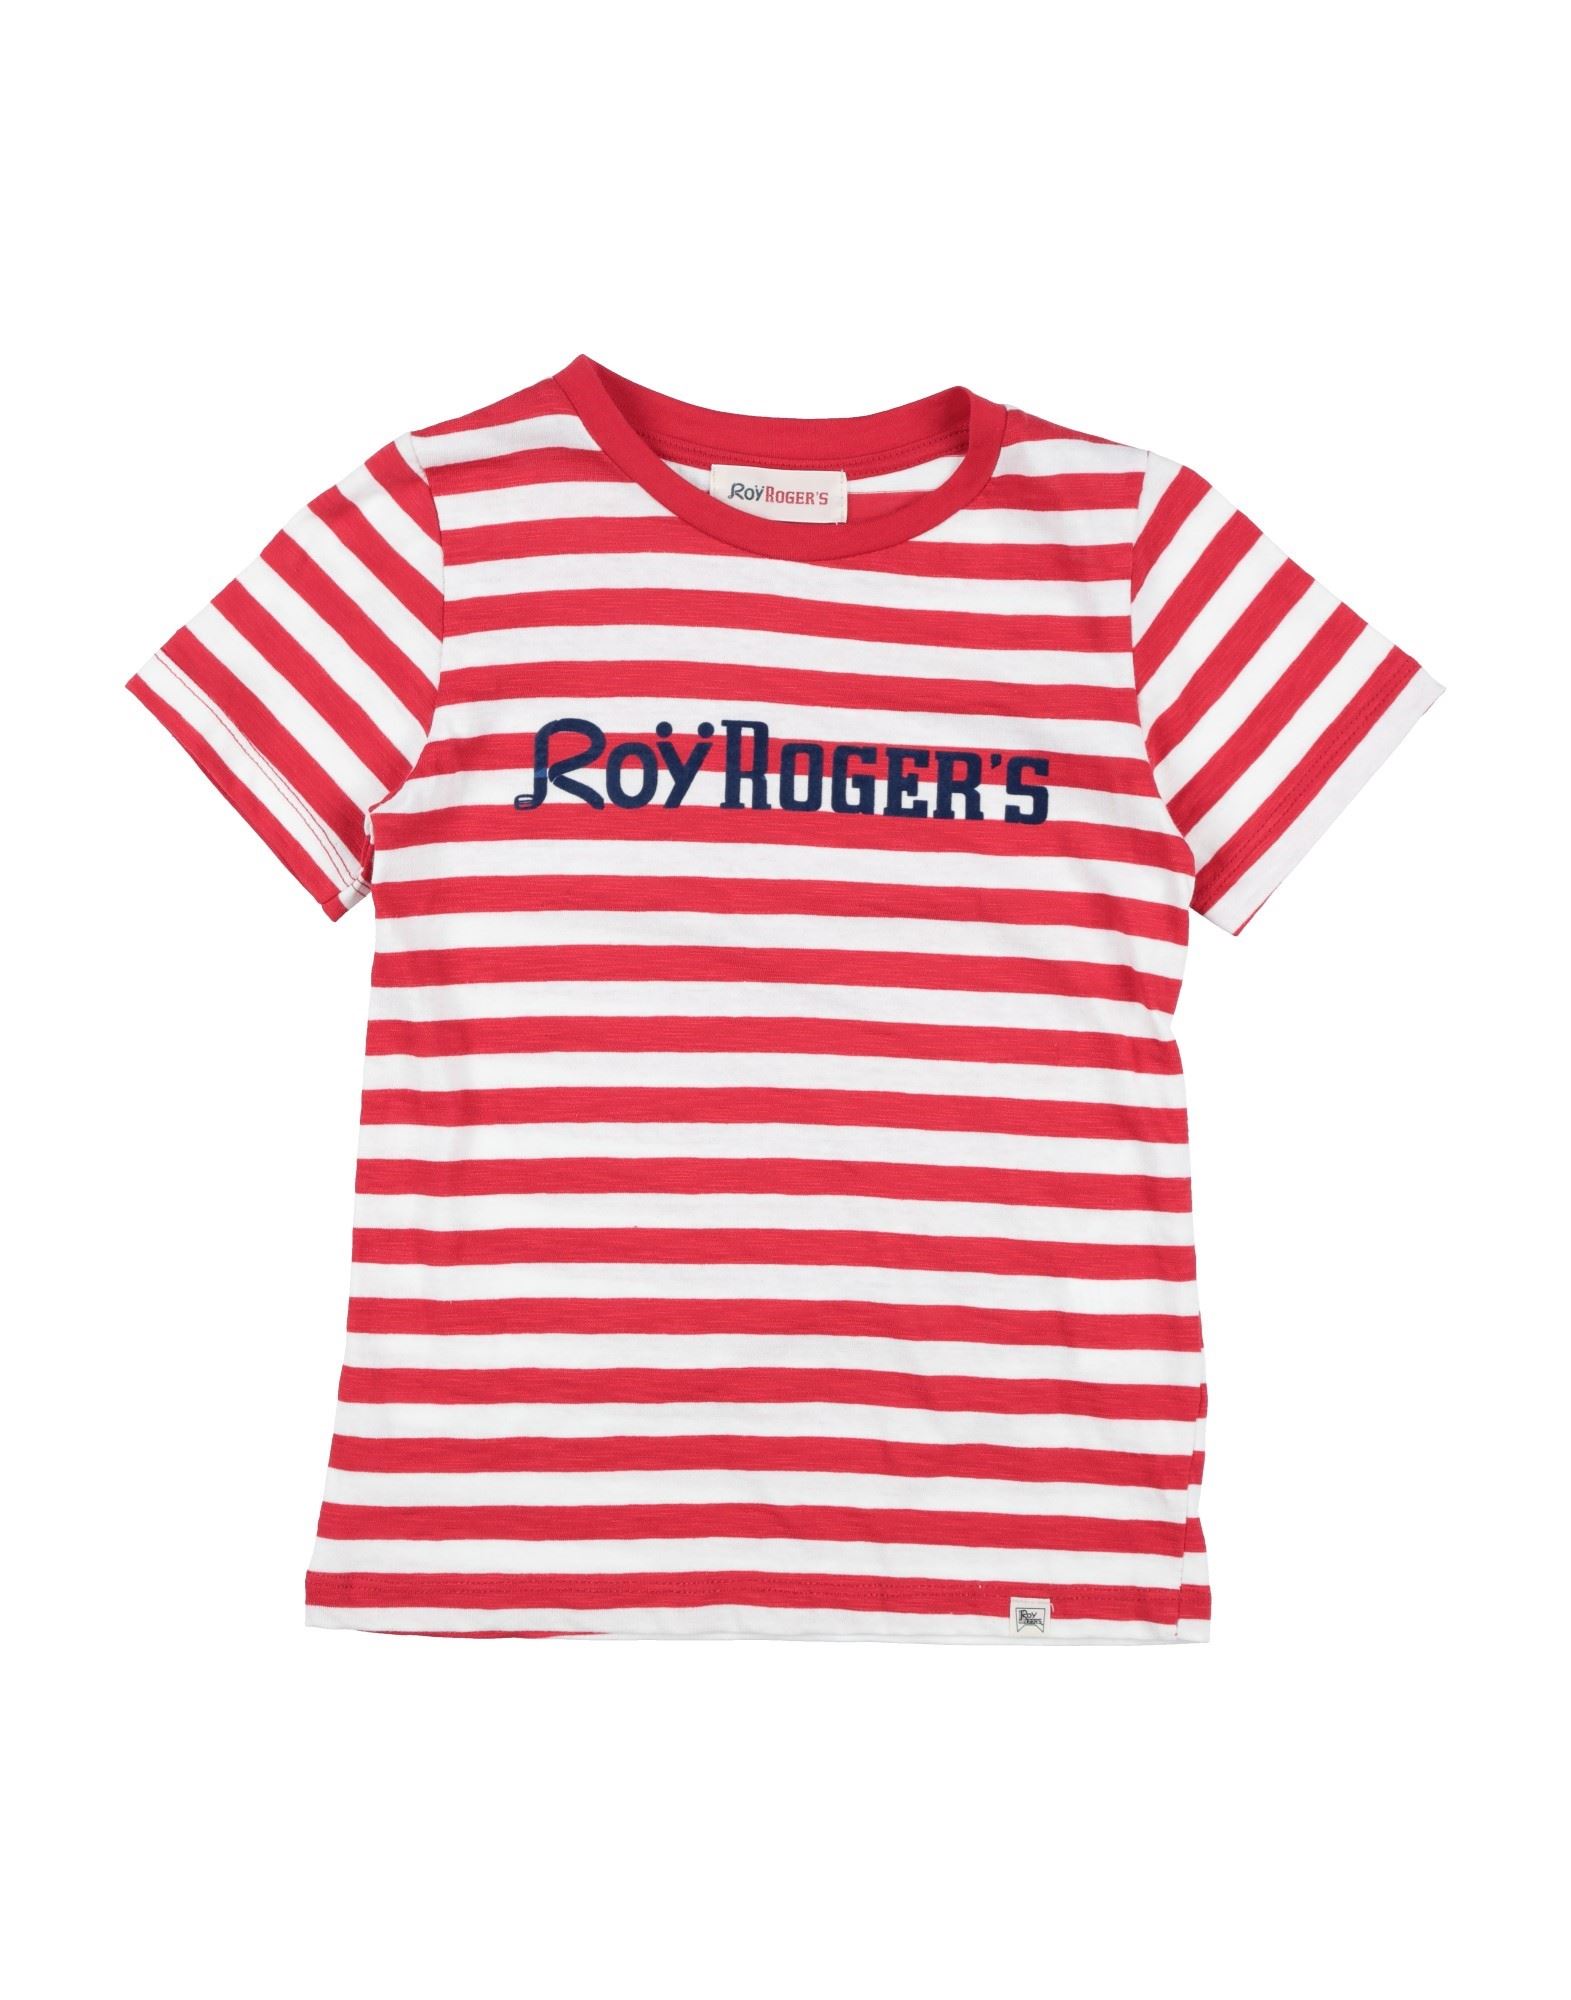 ROŸ ROGER'S T-shirts Kinder Rot von ROŸ ROGER'S